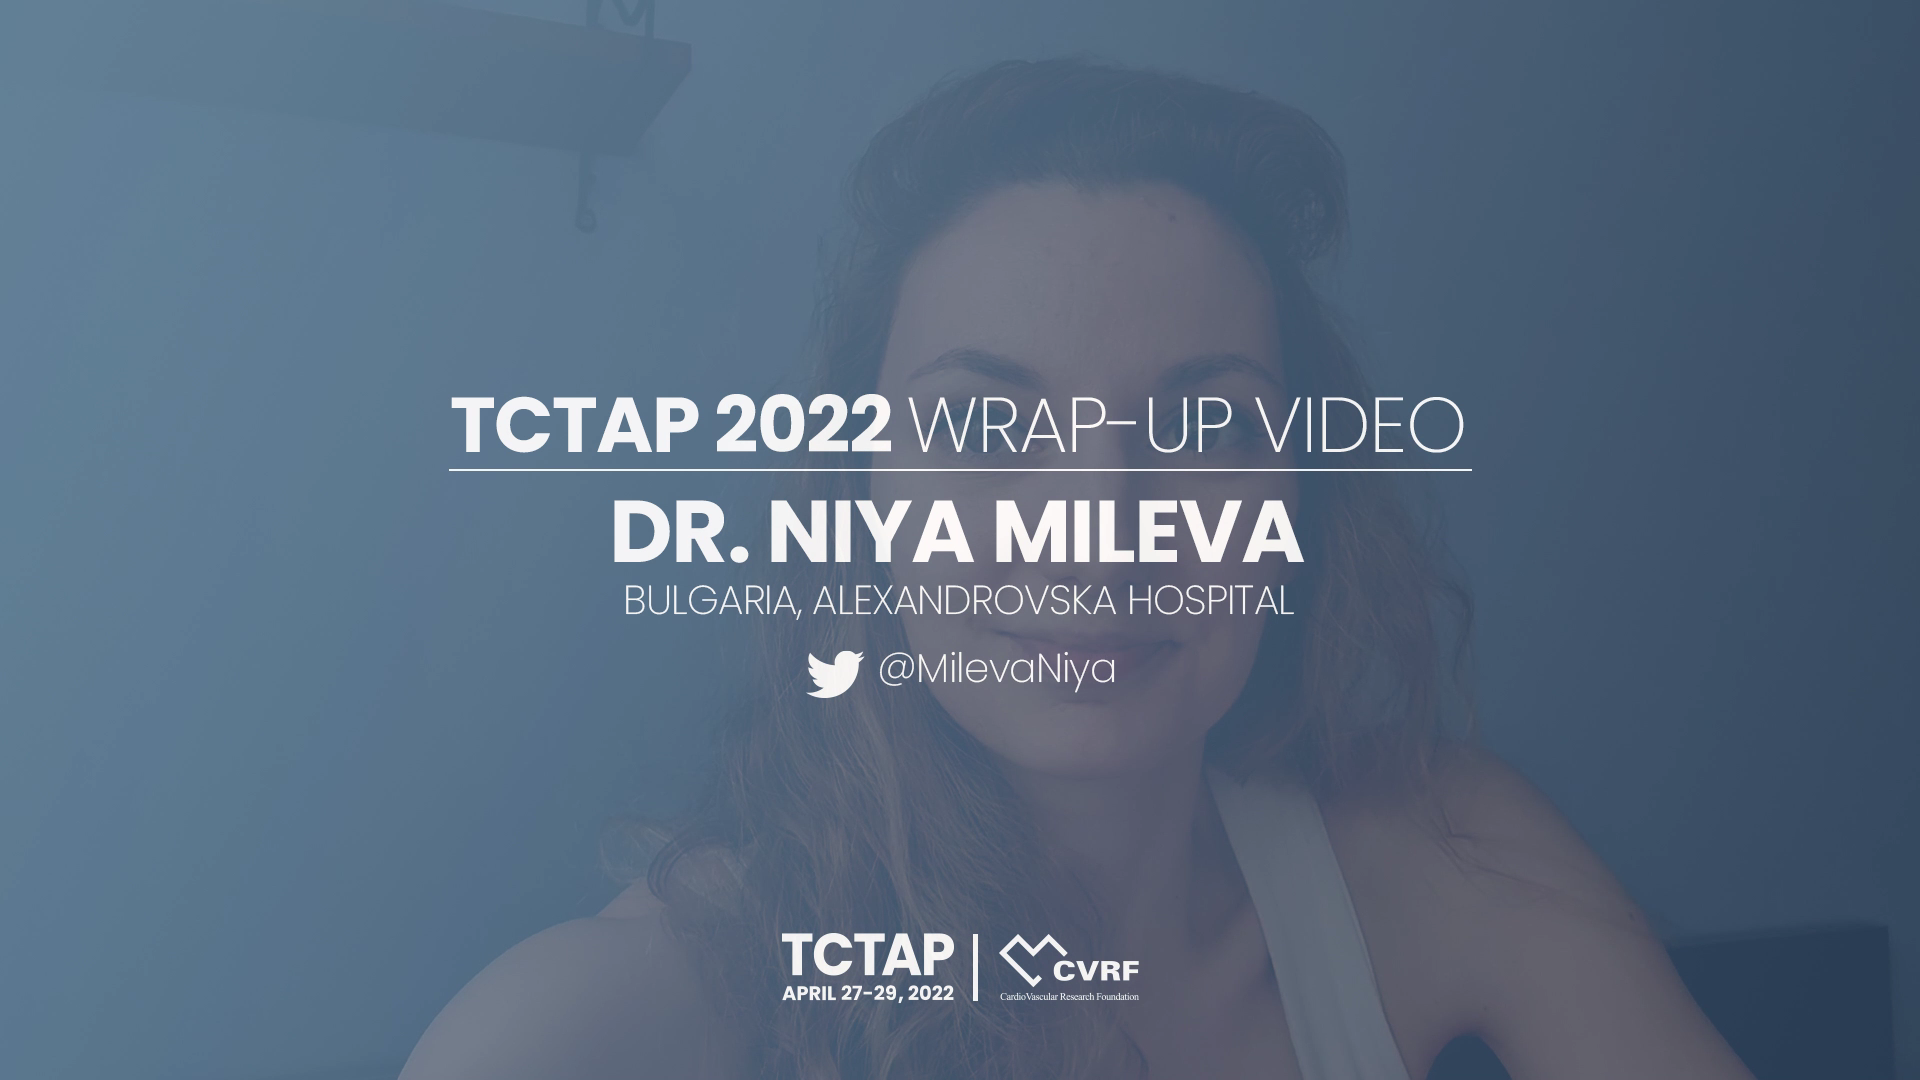 TCTAP 2022 Wrap-up Video from Dr. Niya Mileva